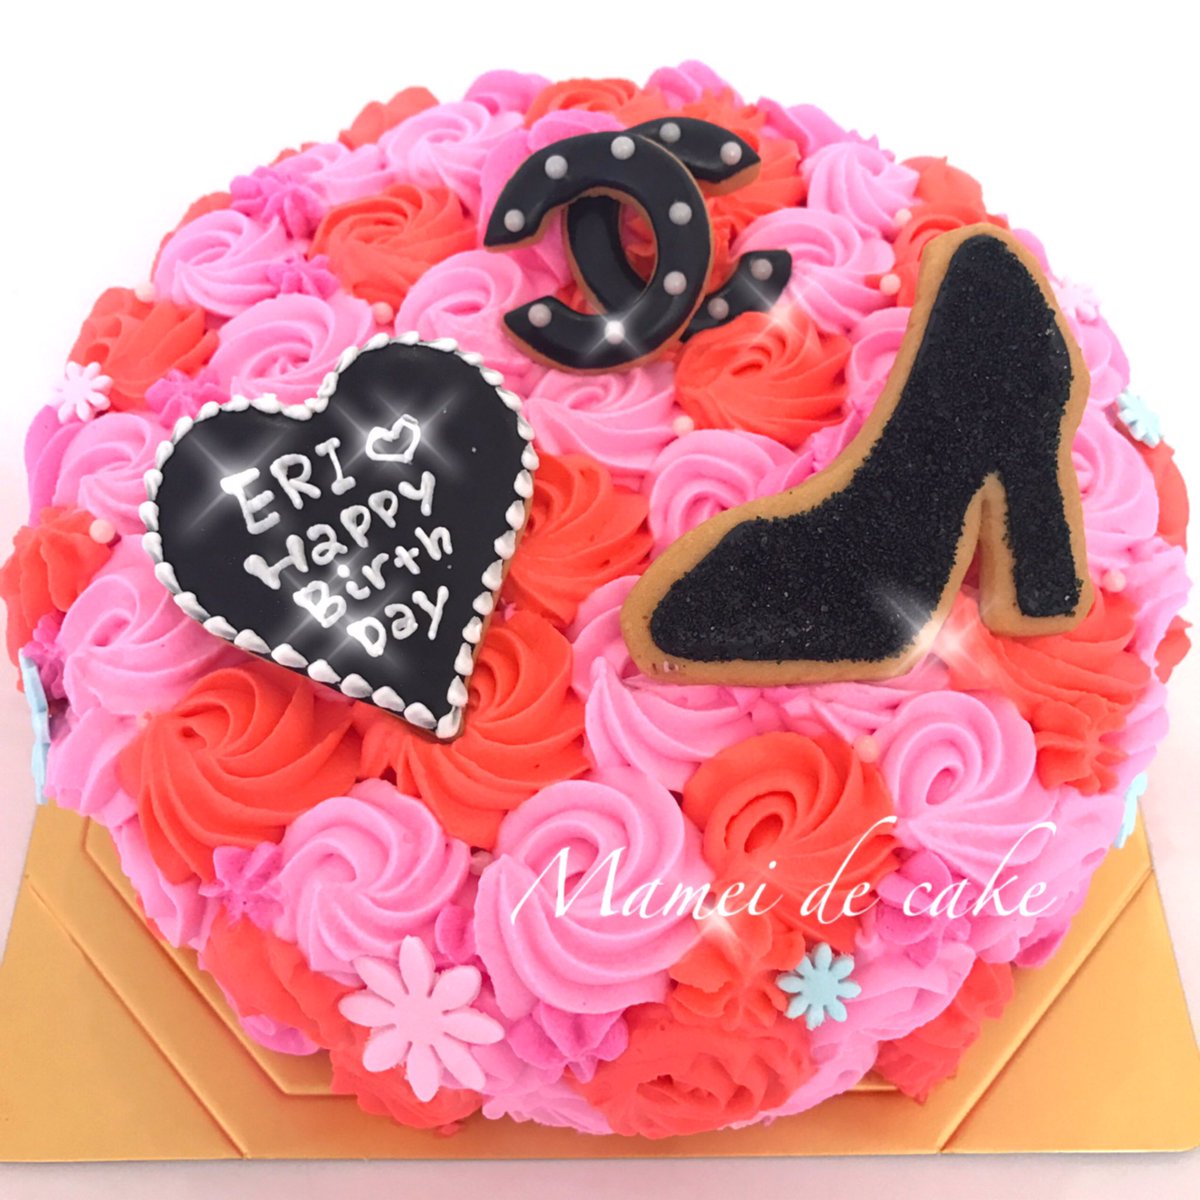 Mamei De Cake マーメイドケーキ Happybirthday ケーキ オーダーケーキ オリジナルケーキ 誕生日ケーキ サプライズ スイーツ ピンク ラブリー ガラスの靴 誕生日 女子会 パーティー カフェ Cake Ordercake Sweets Pink Cafe